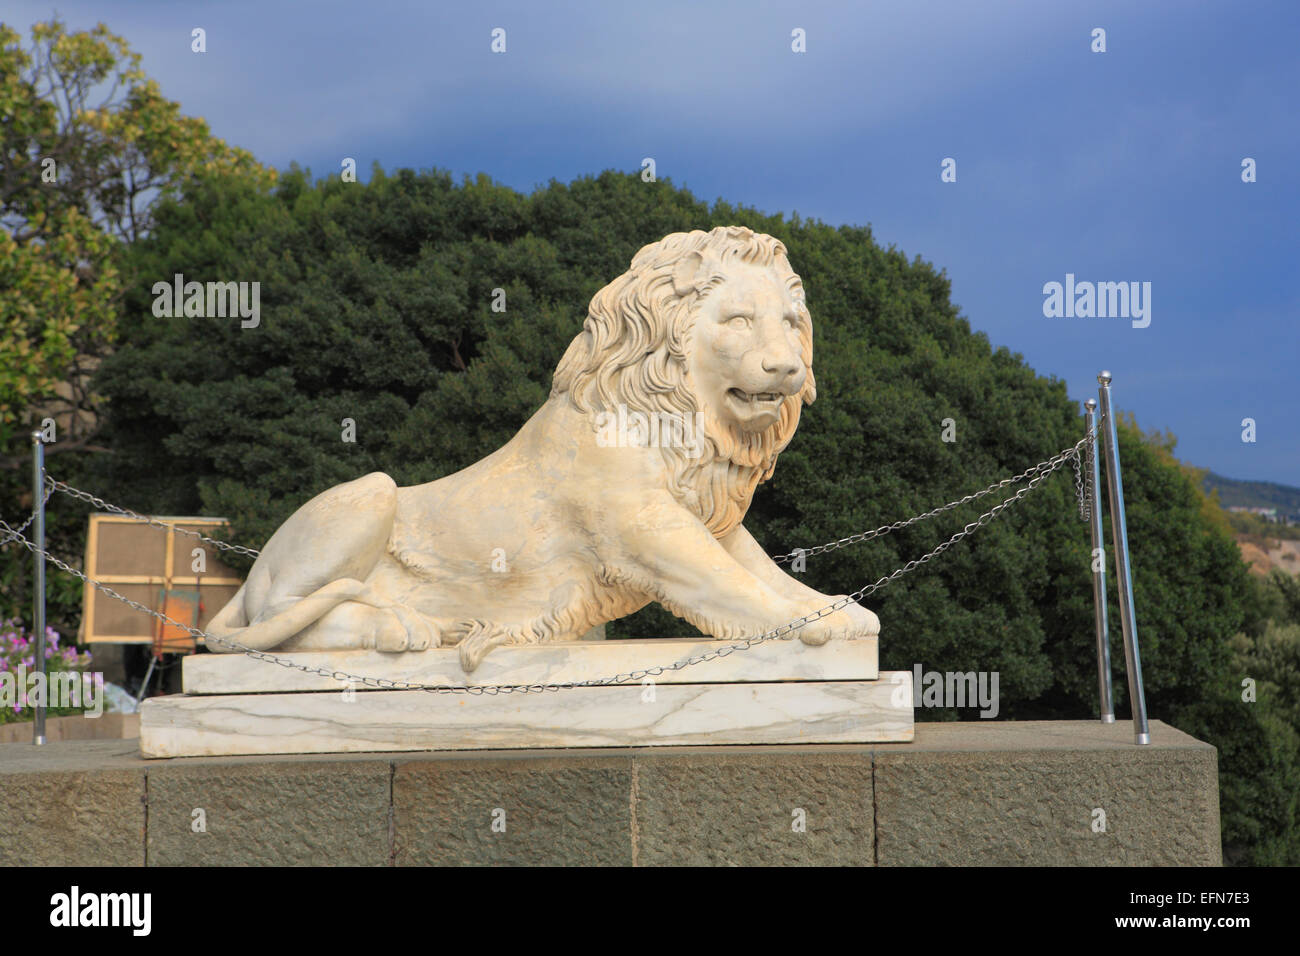 Marble sculpture of lion, Vorontsov Palace (1848, architect Edward Blore), Alupka, Crimea, Ukraine Stock Photo